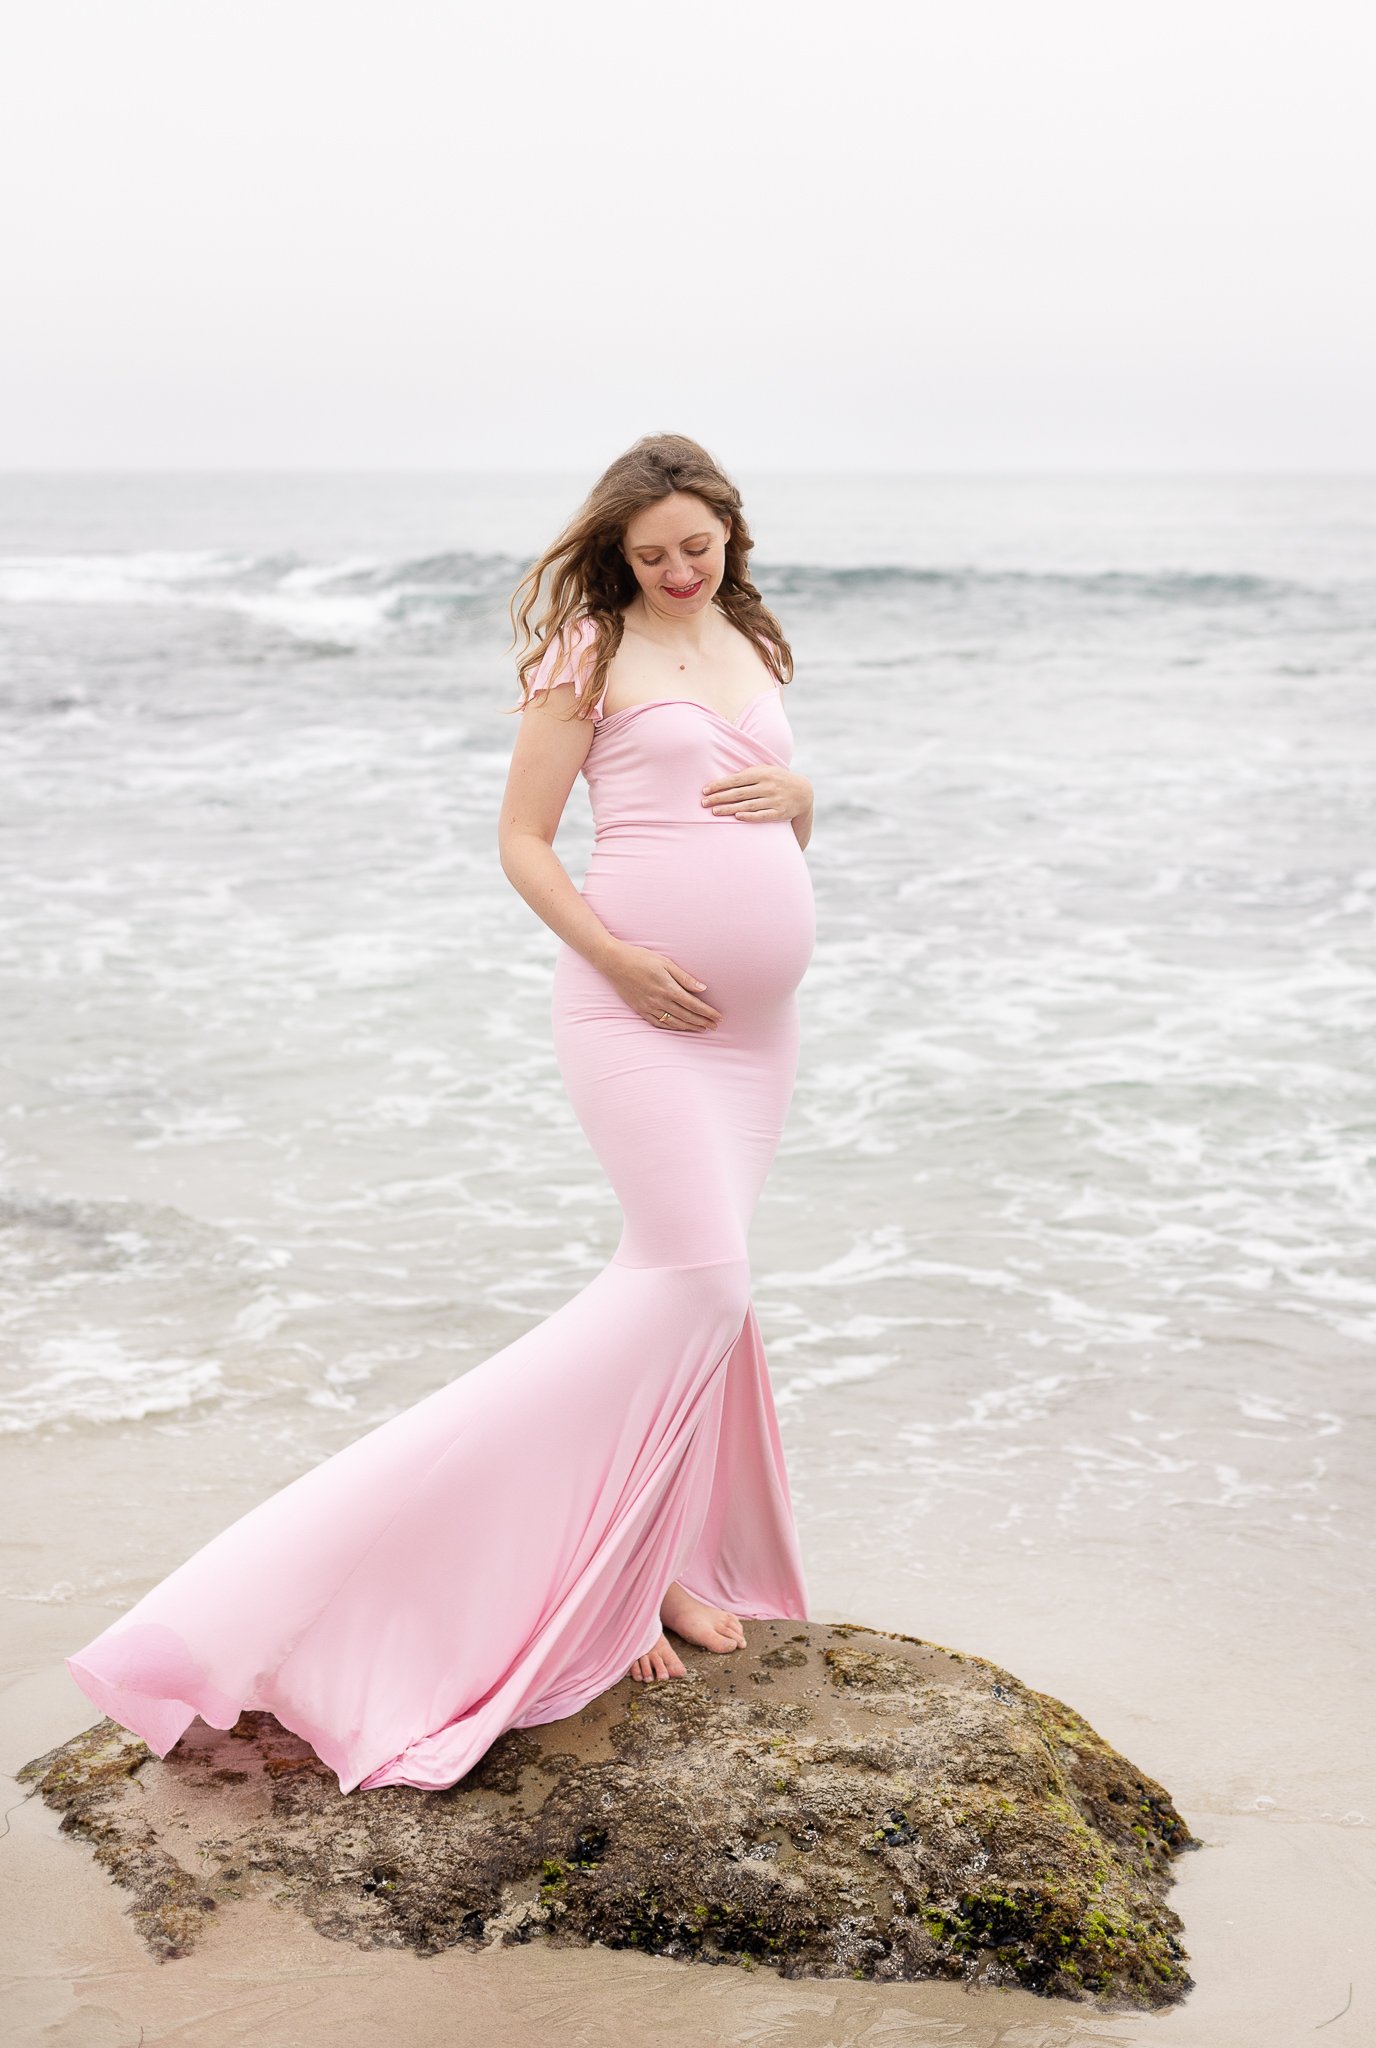 San Diego-Professional-Portraits-Pregnancy-Maternity-Baby-Family-Pics-Photos-Photographers-Photoshoot-Photography-Photographer41.jpg